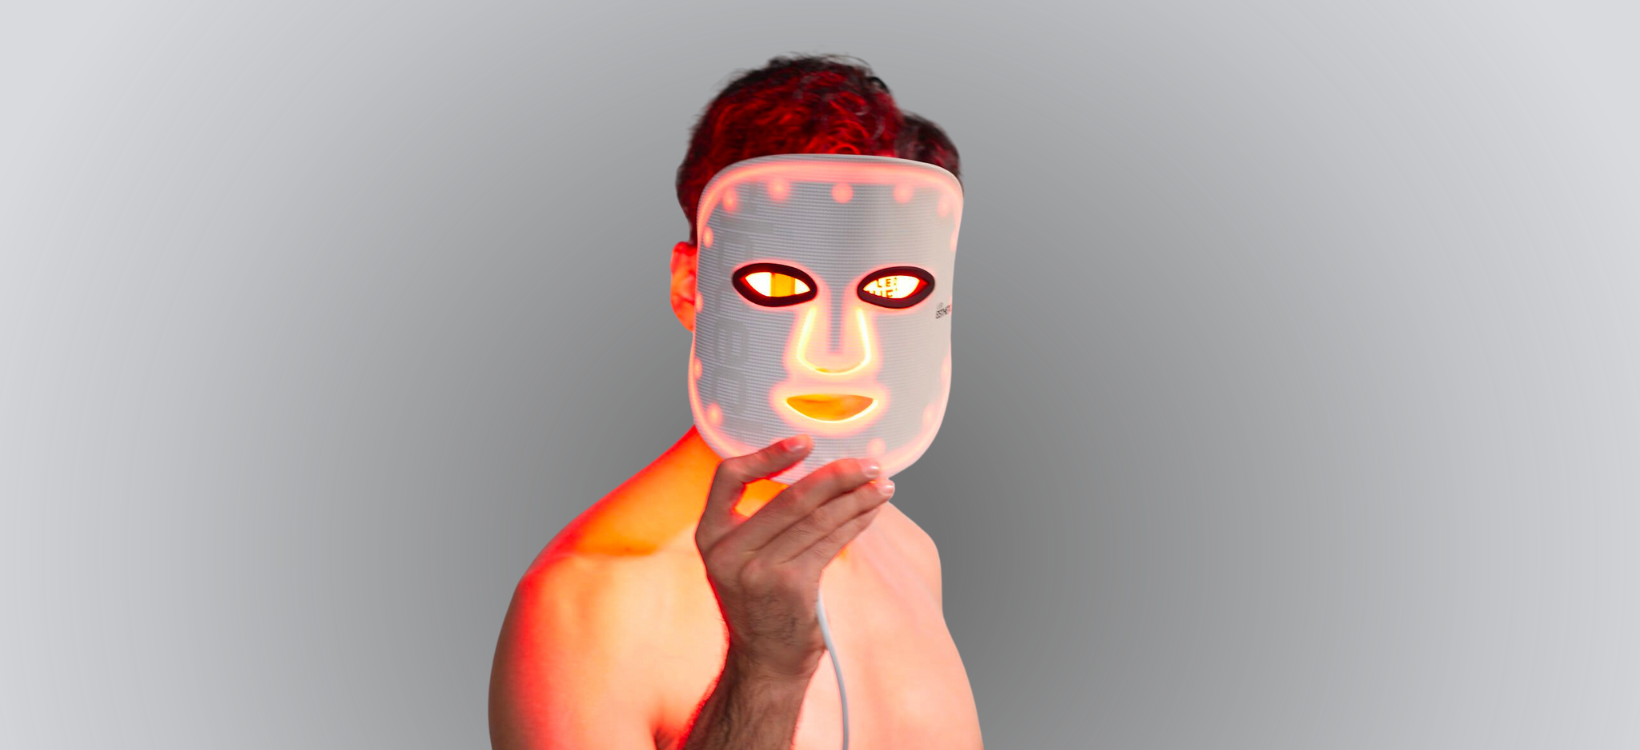 Man wearing a Hard LED light mask